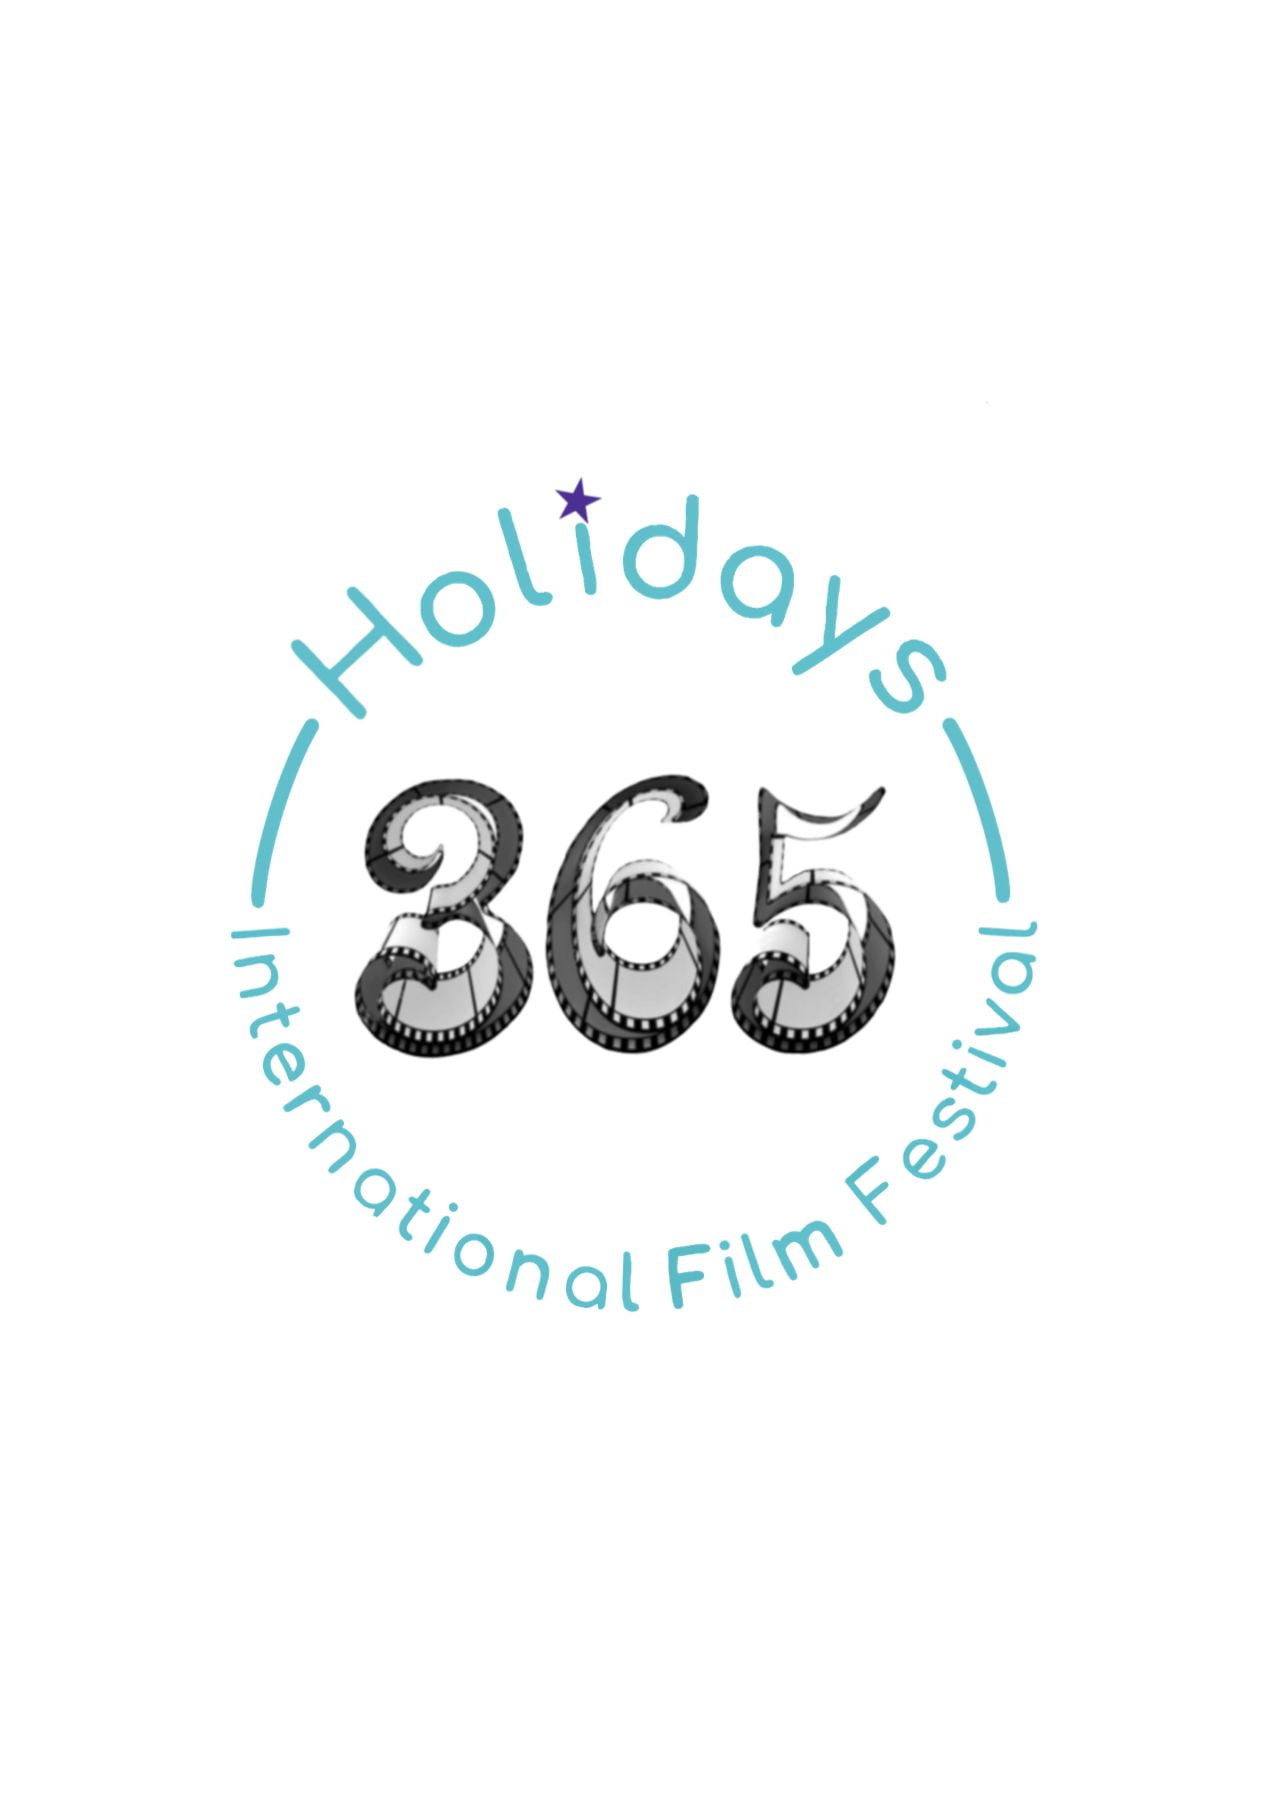 Holidays365 International Film Festival™